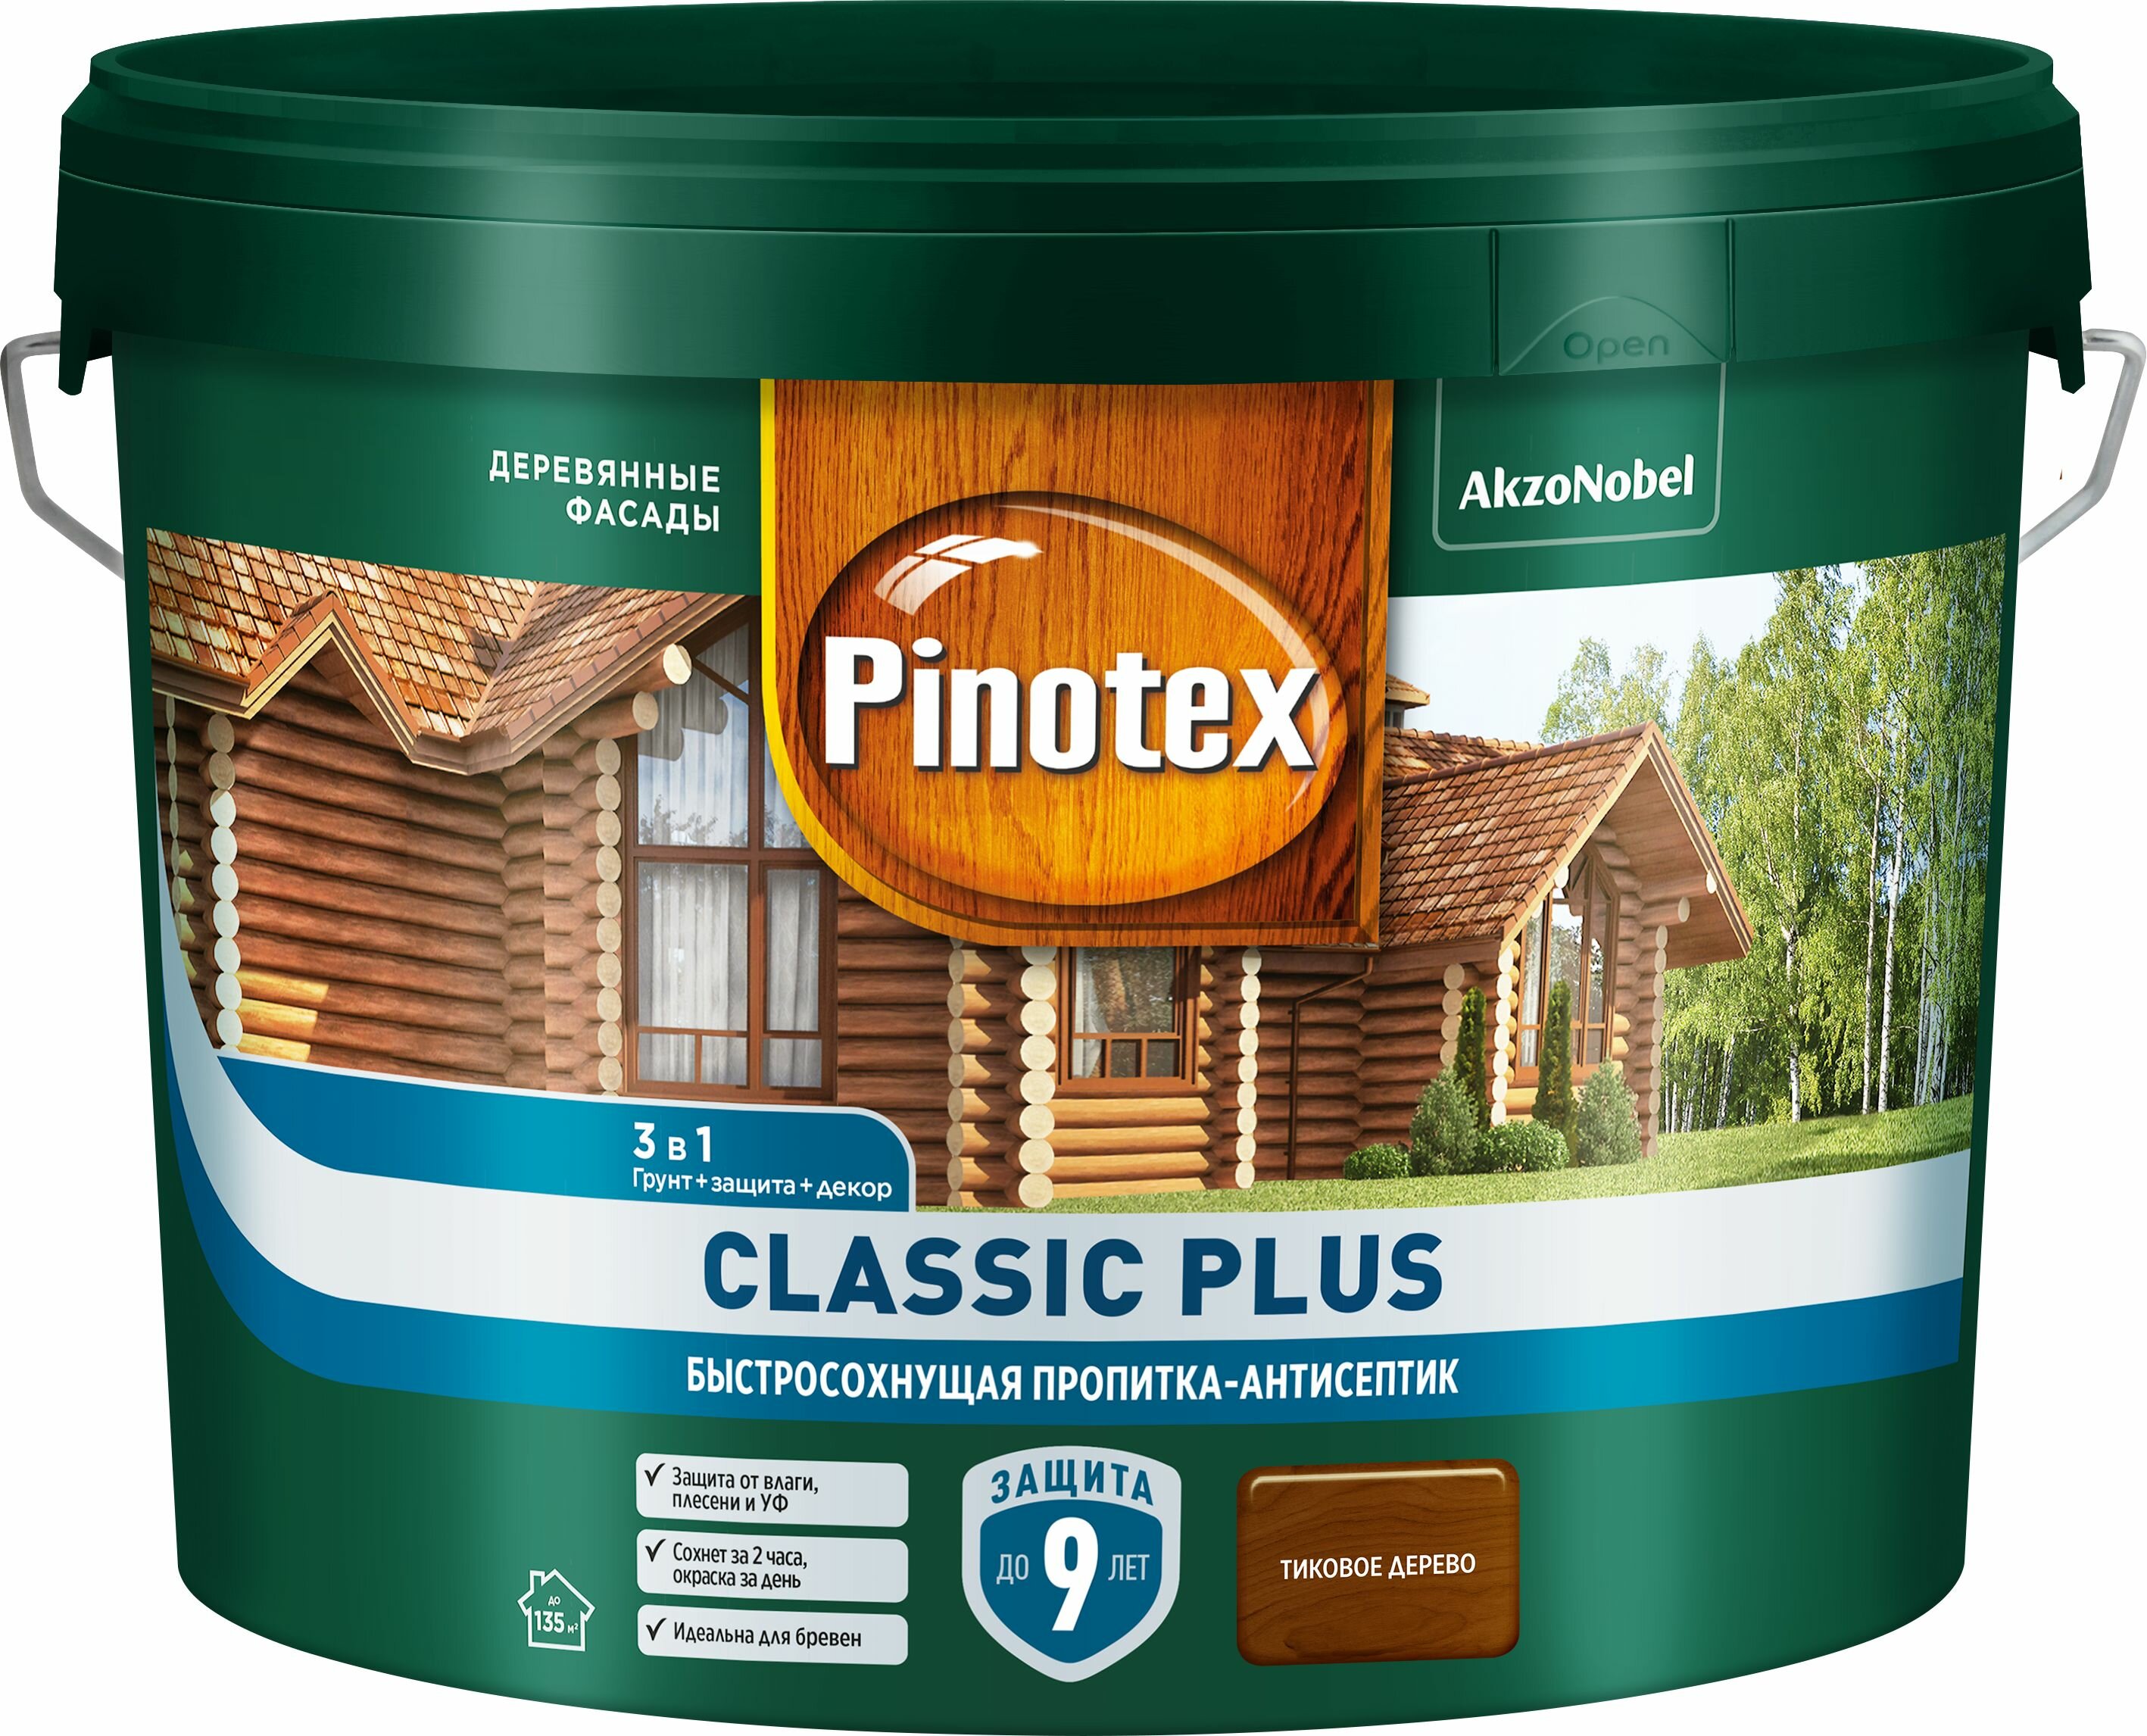 Pinotex пропитка Classic Plus